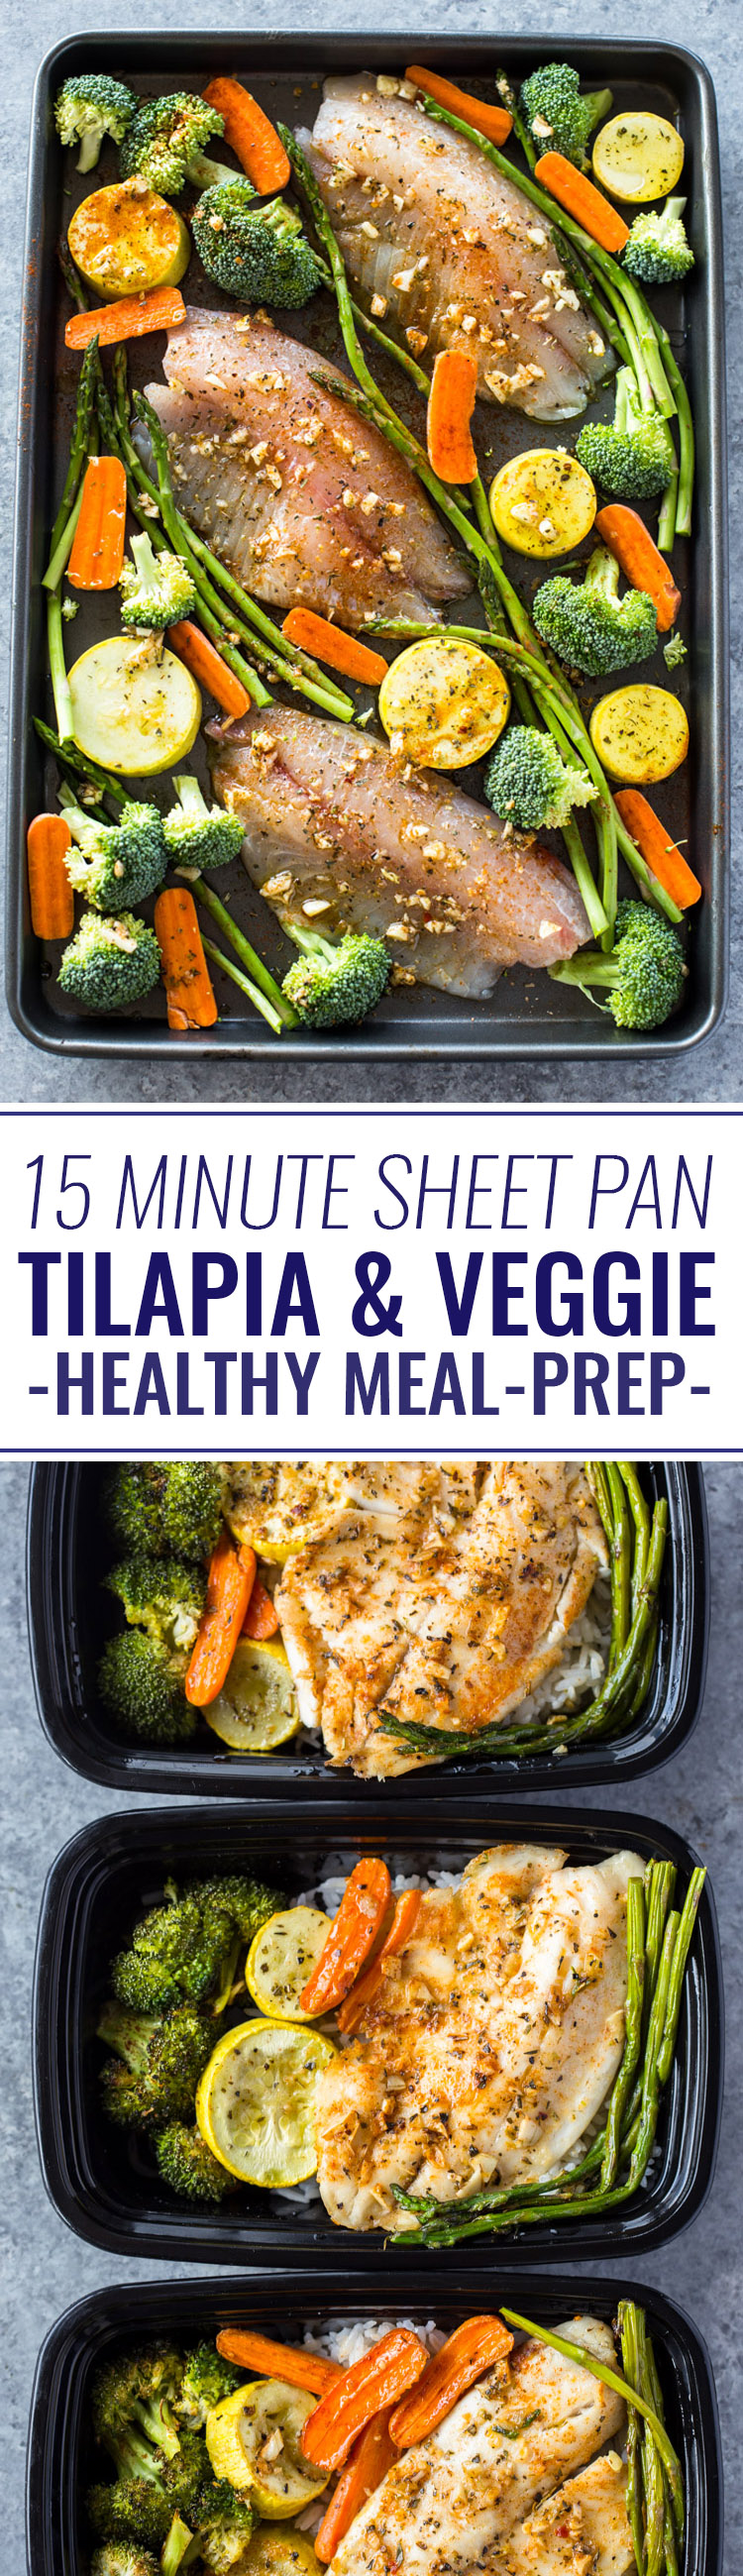 Healthy Sheet Pan Tilapia and Veggies + Meal-Prep